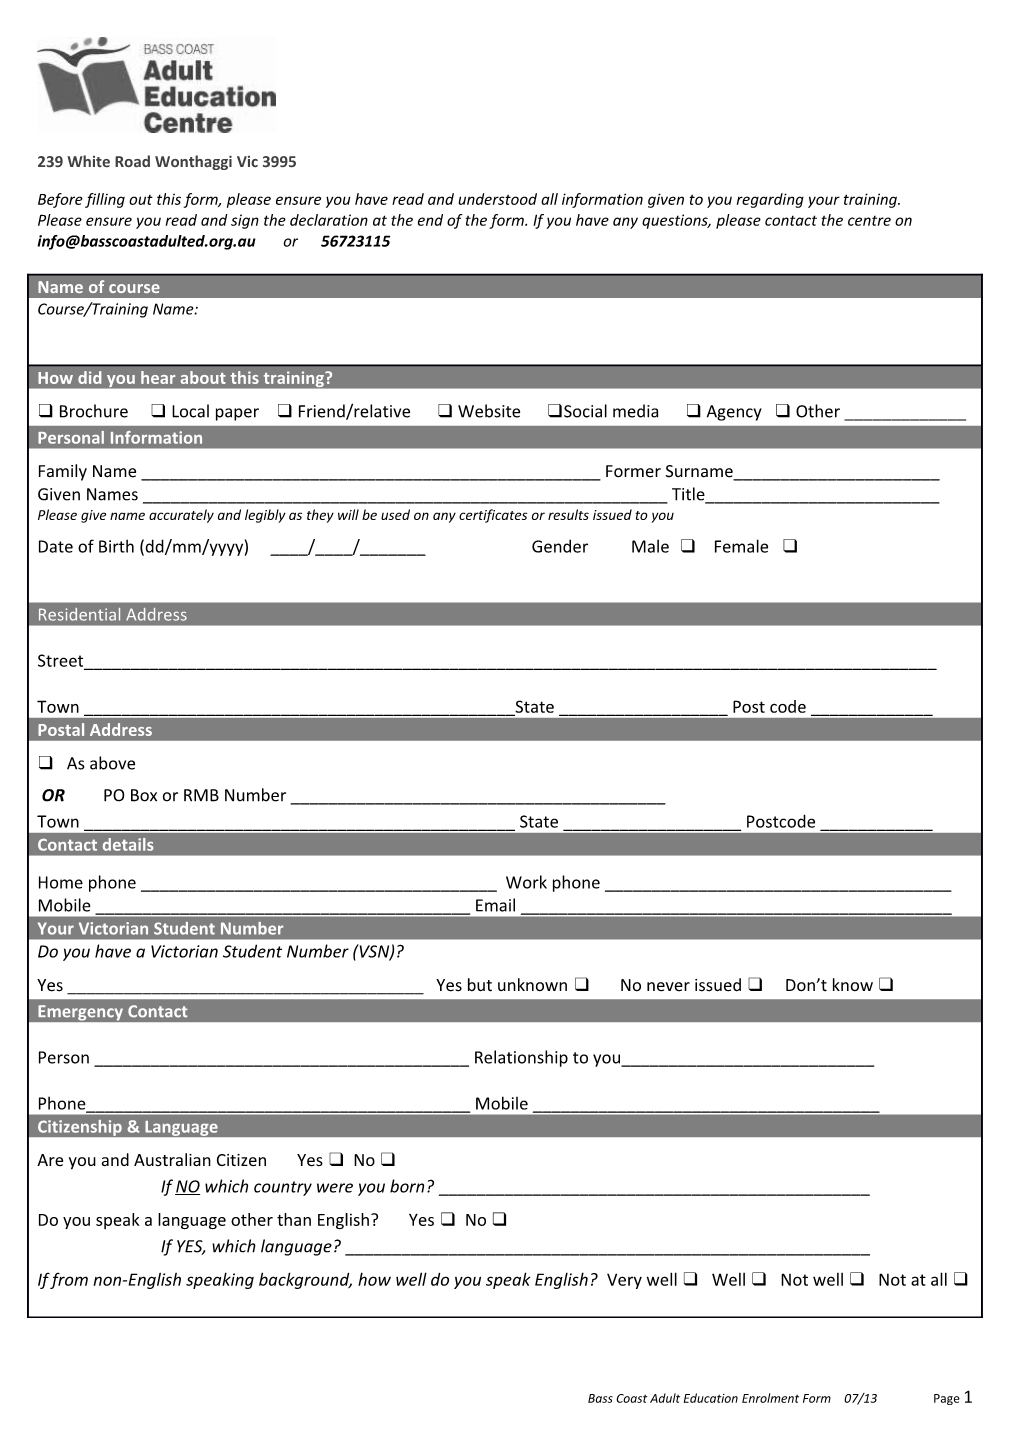 Bass Coast Adult Education Enrolment Form 07/13 Page 1